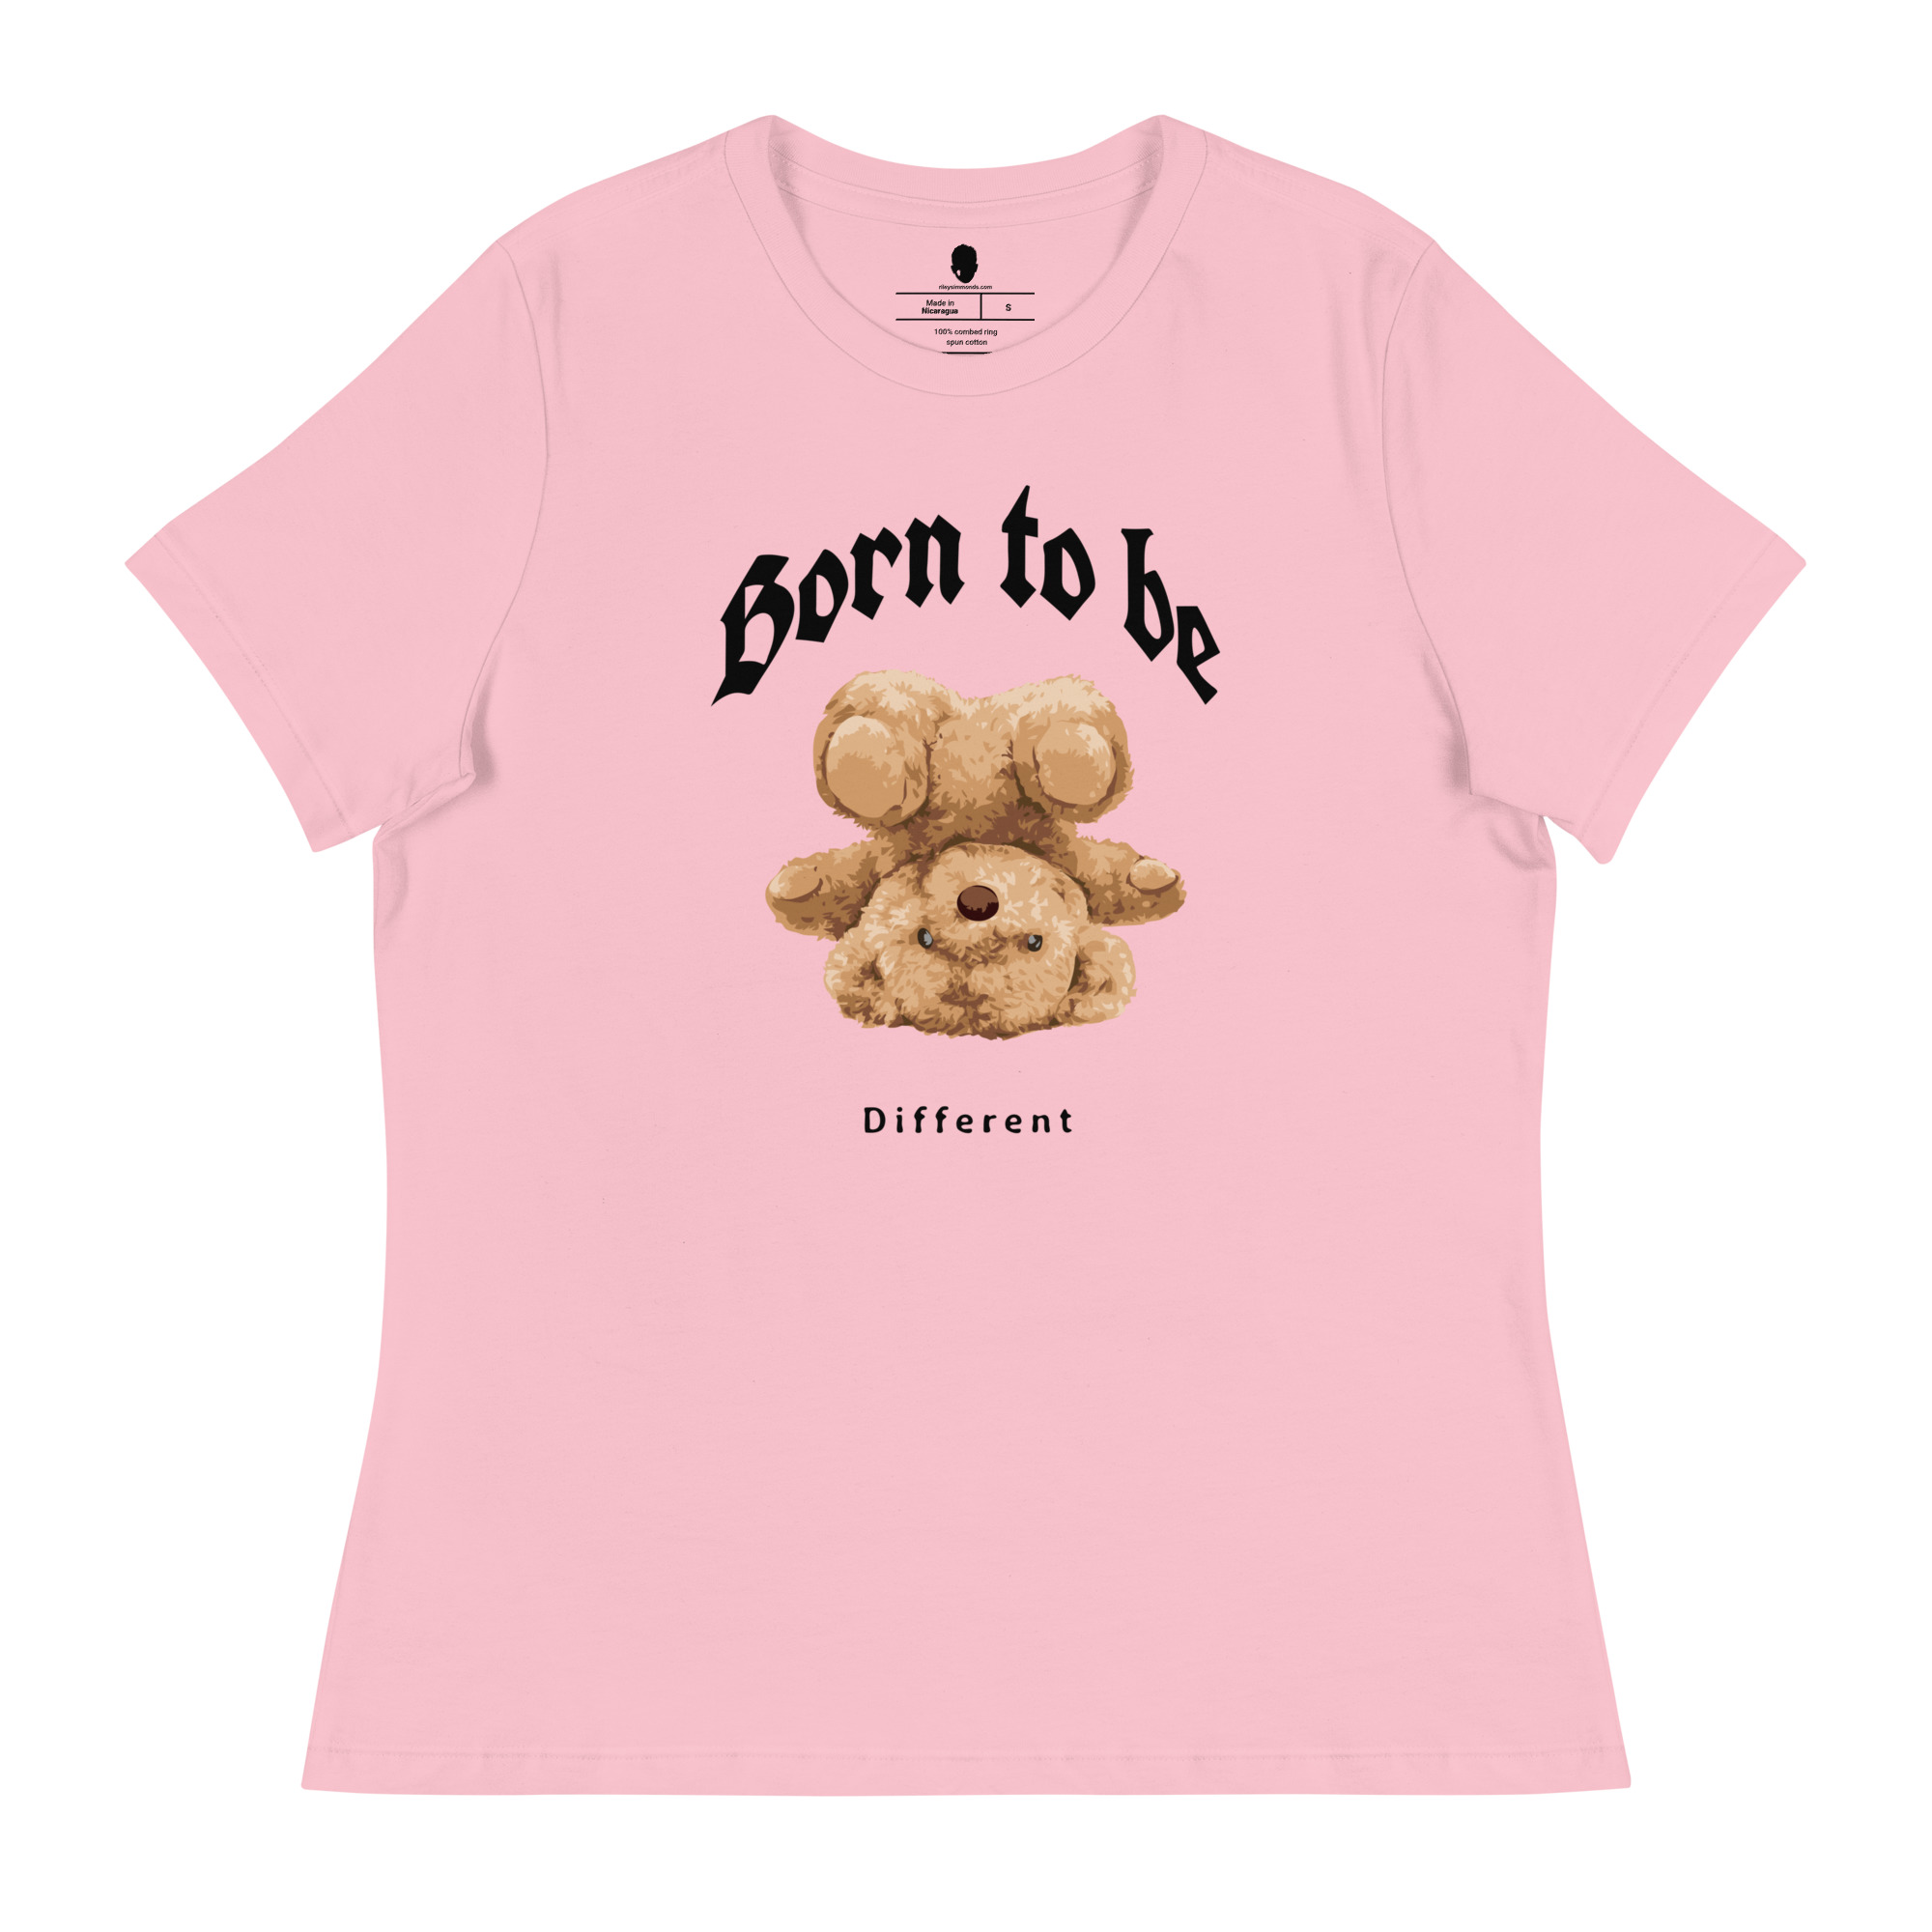 womens-relaxed-t-shirt-pink-front-655779509a7b5.jpg